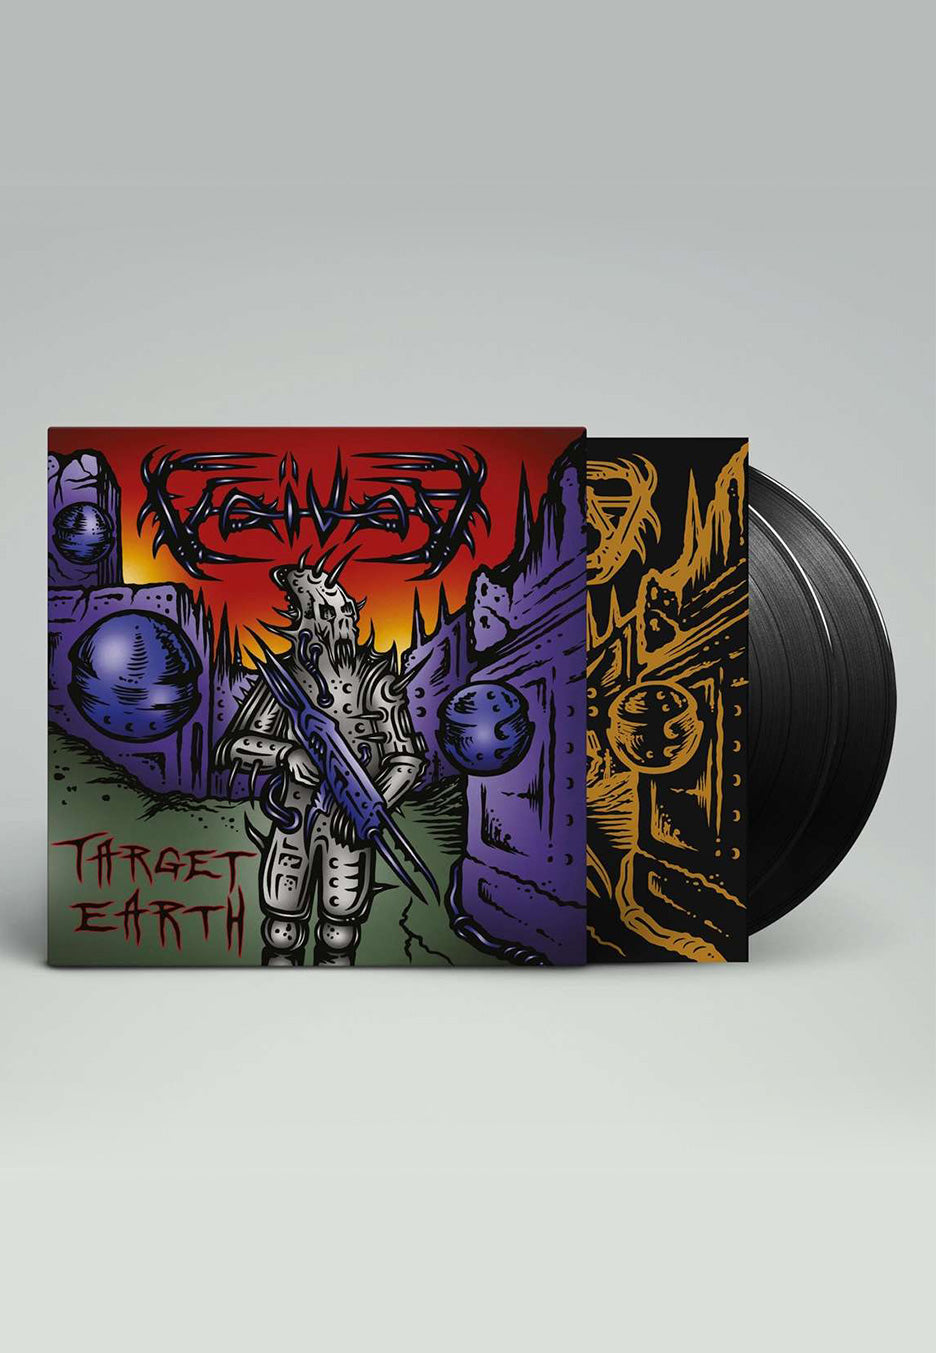 Voivod - Target Earth - 2 Vinyl